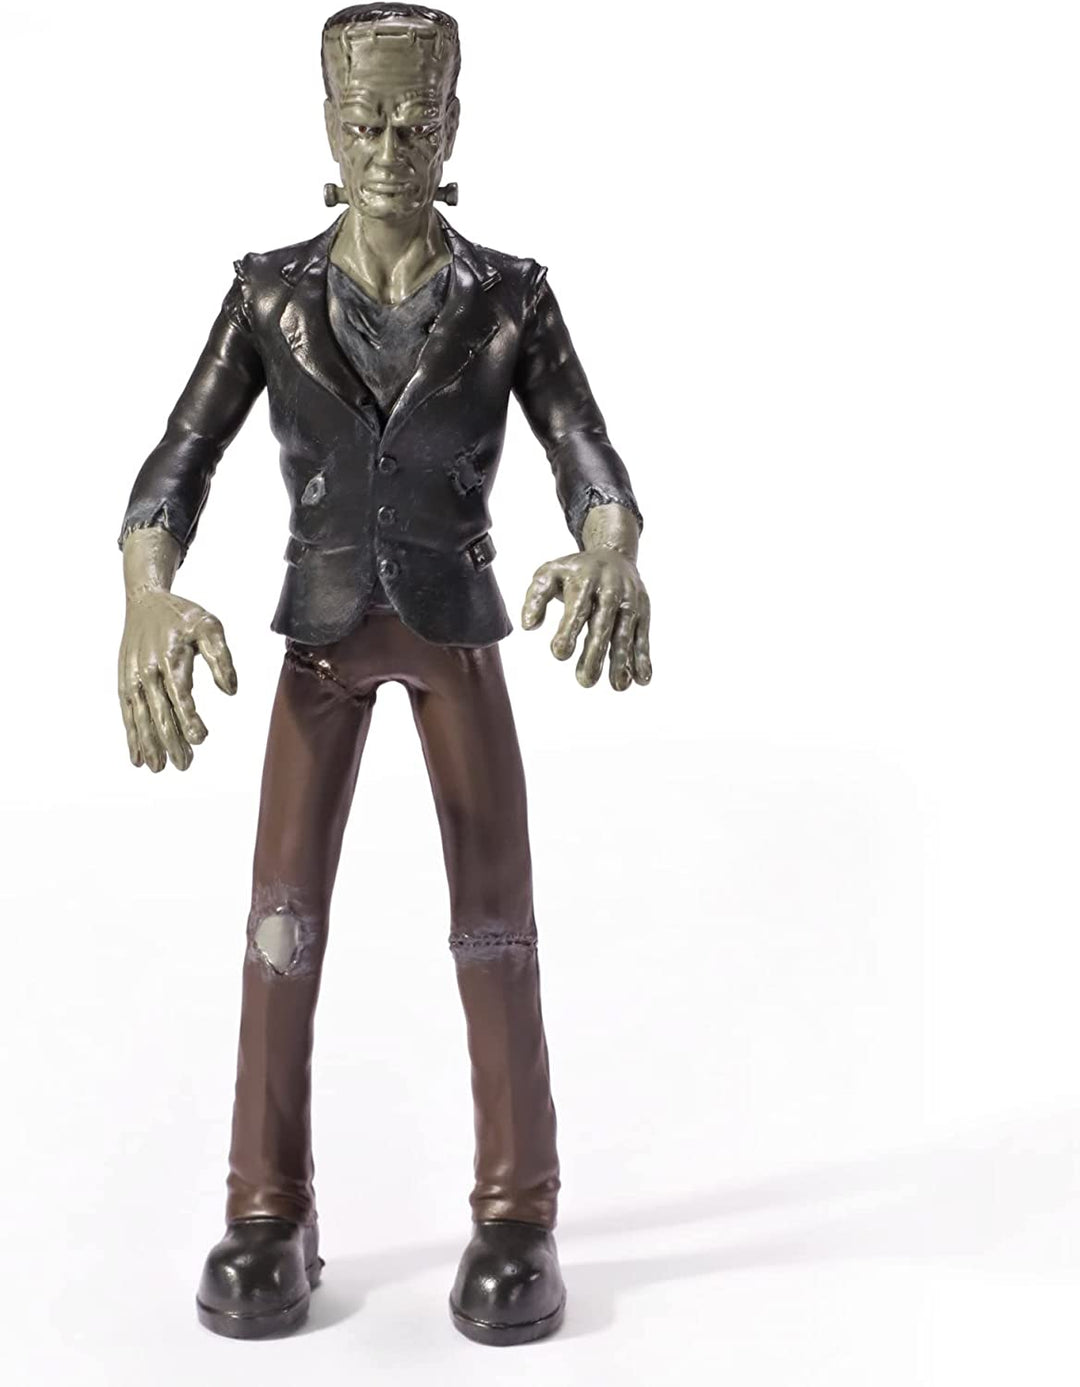 Frankenstein Monster Universal Monsters Bendyfigs Figure